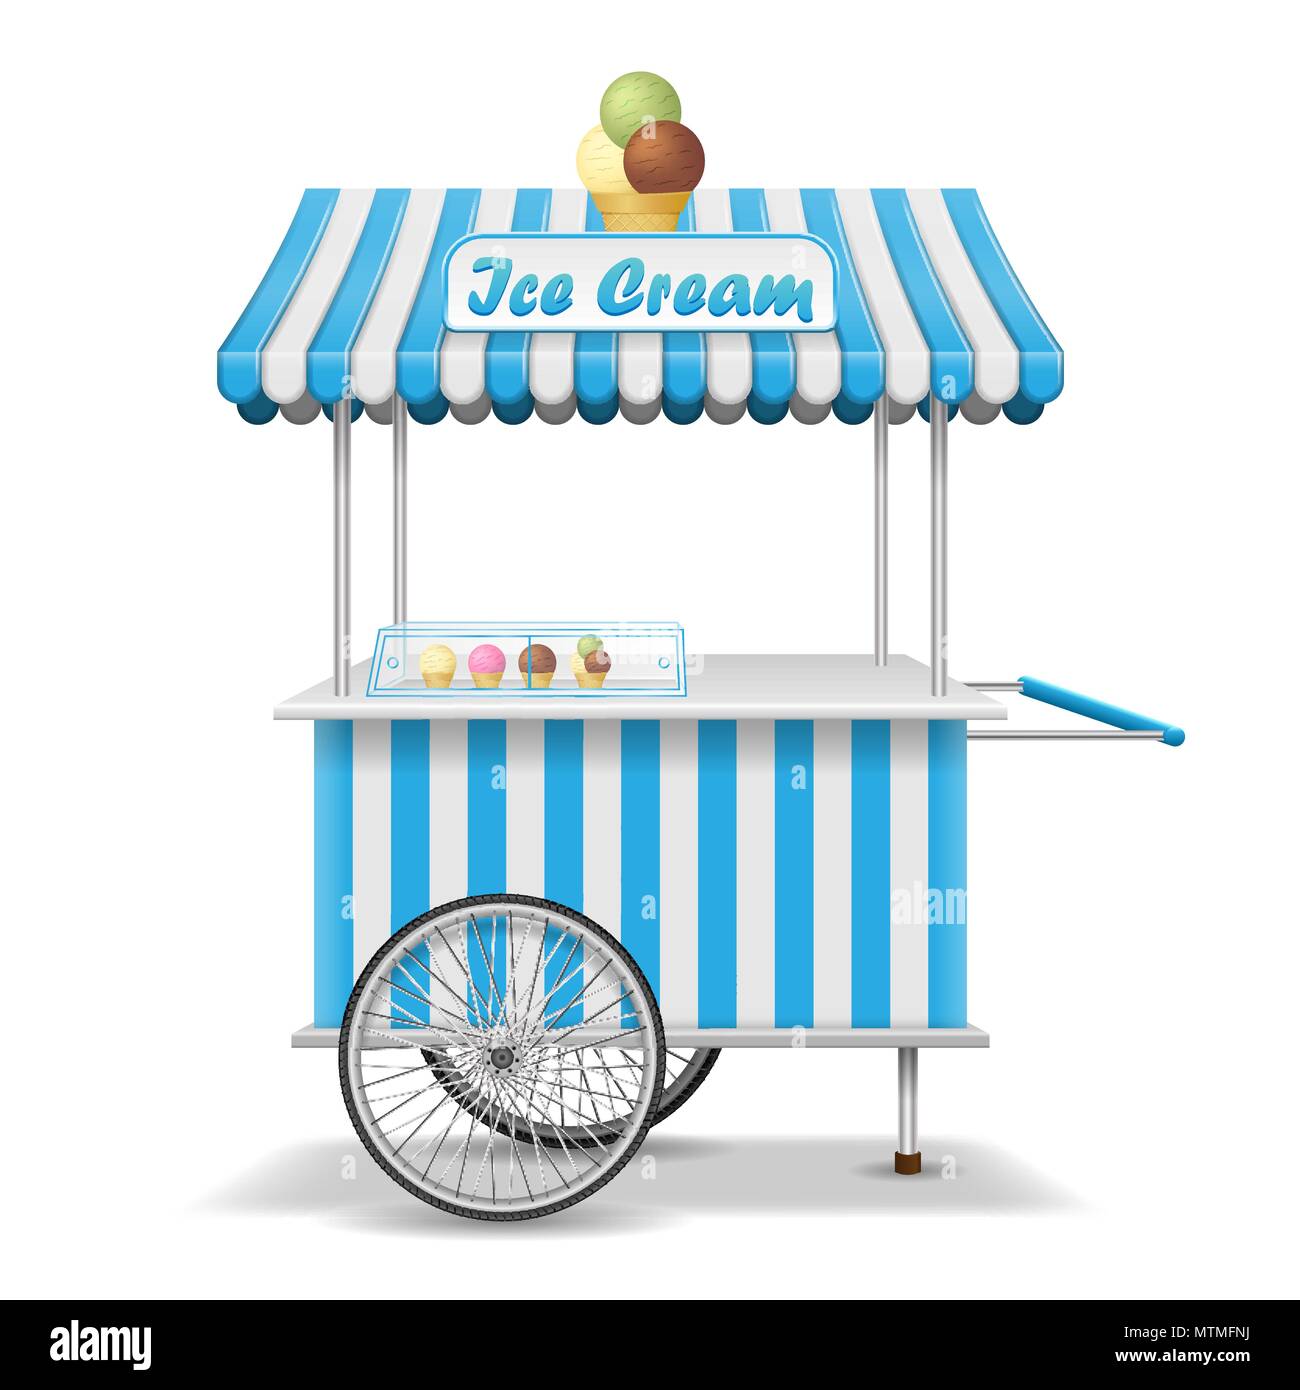 Realistische Street Food Warenkorb mit Rädern. Mobile rosa Eis markt Vorlage abgewürgt. Eis Kiosk Store mockup. Vector Illustration Stock Vektor